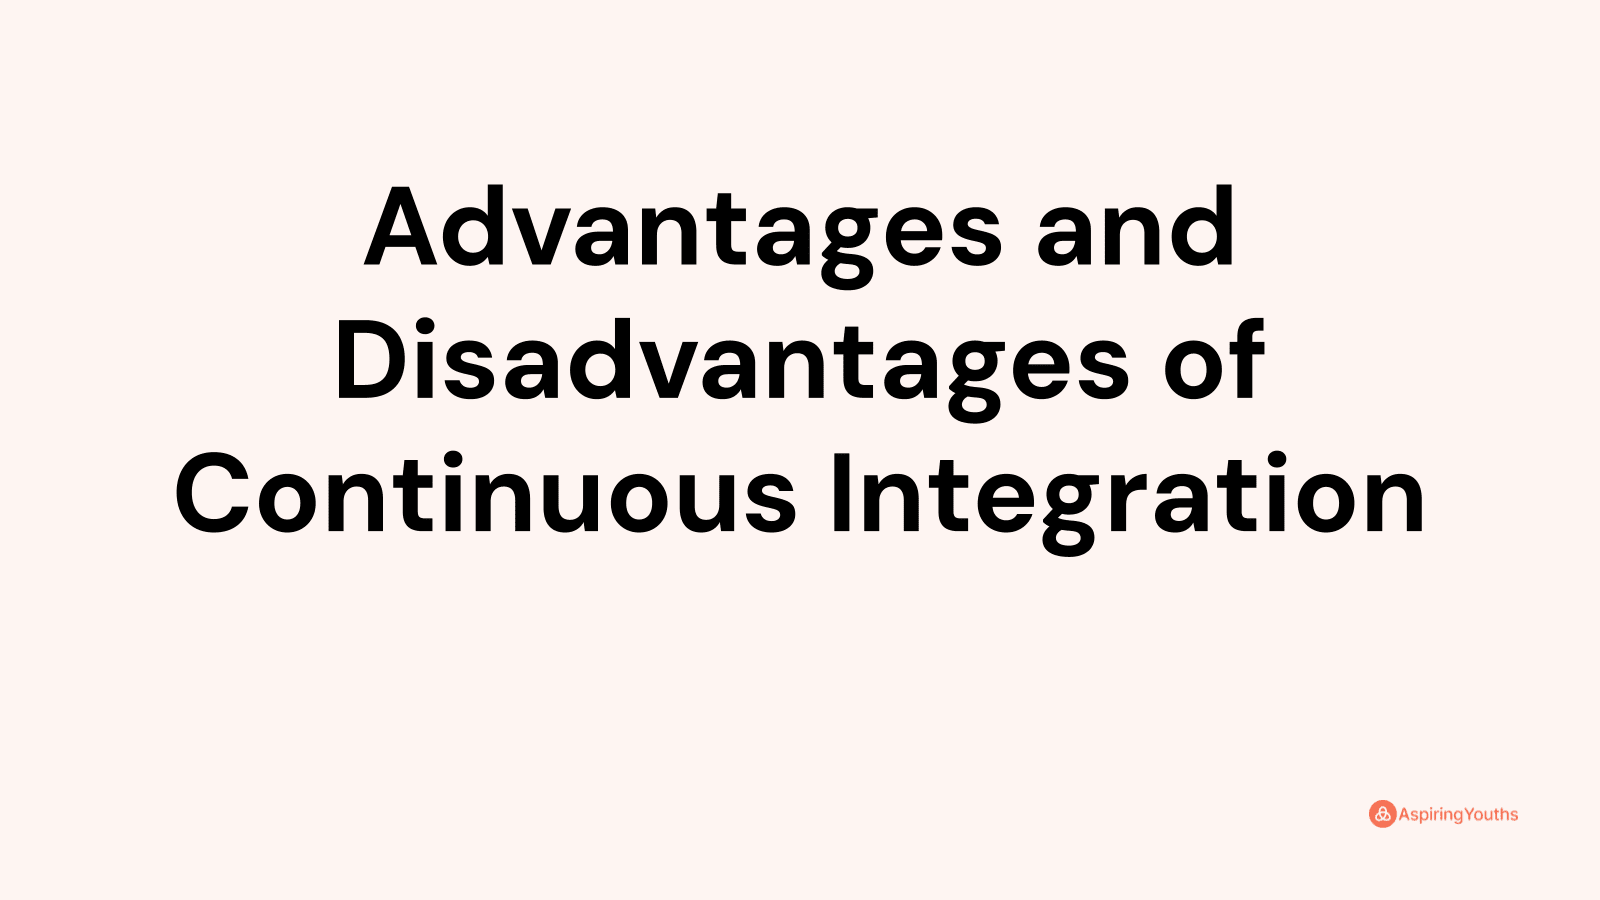 Advantages and disadvantages of Continuous Integration